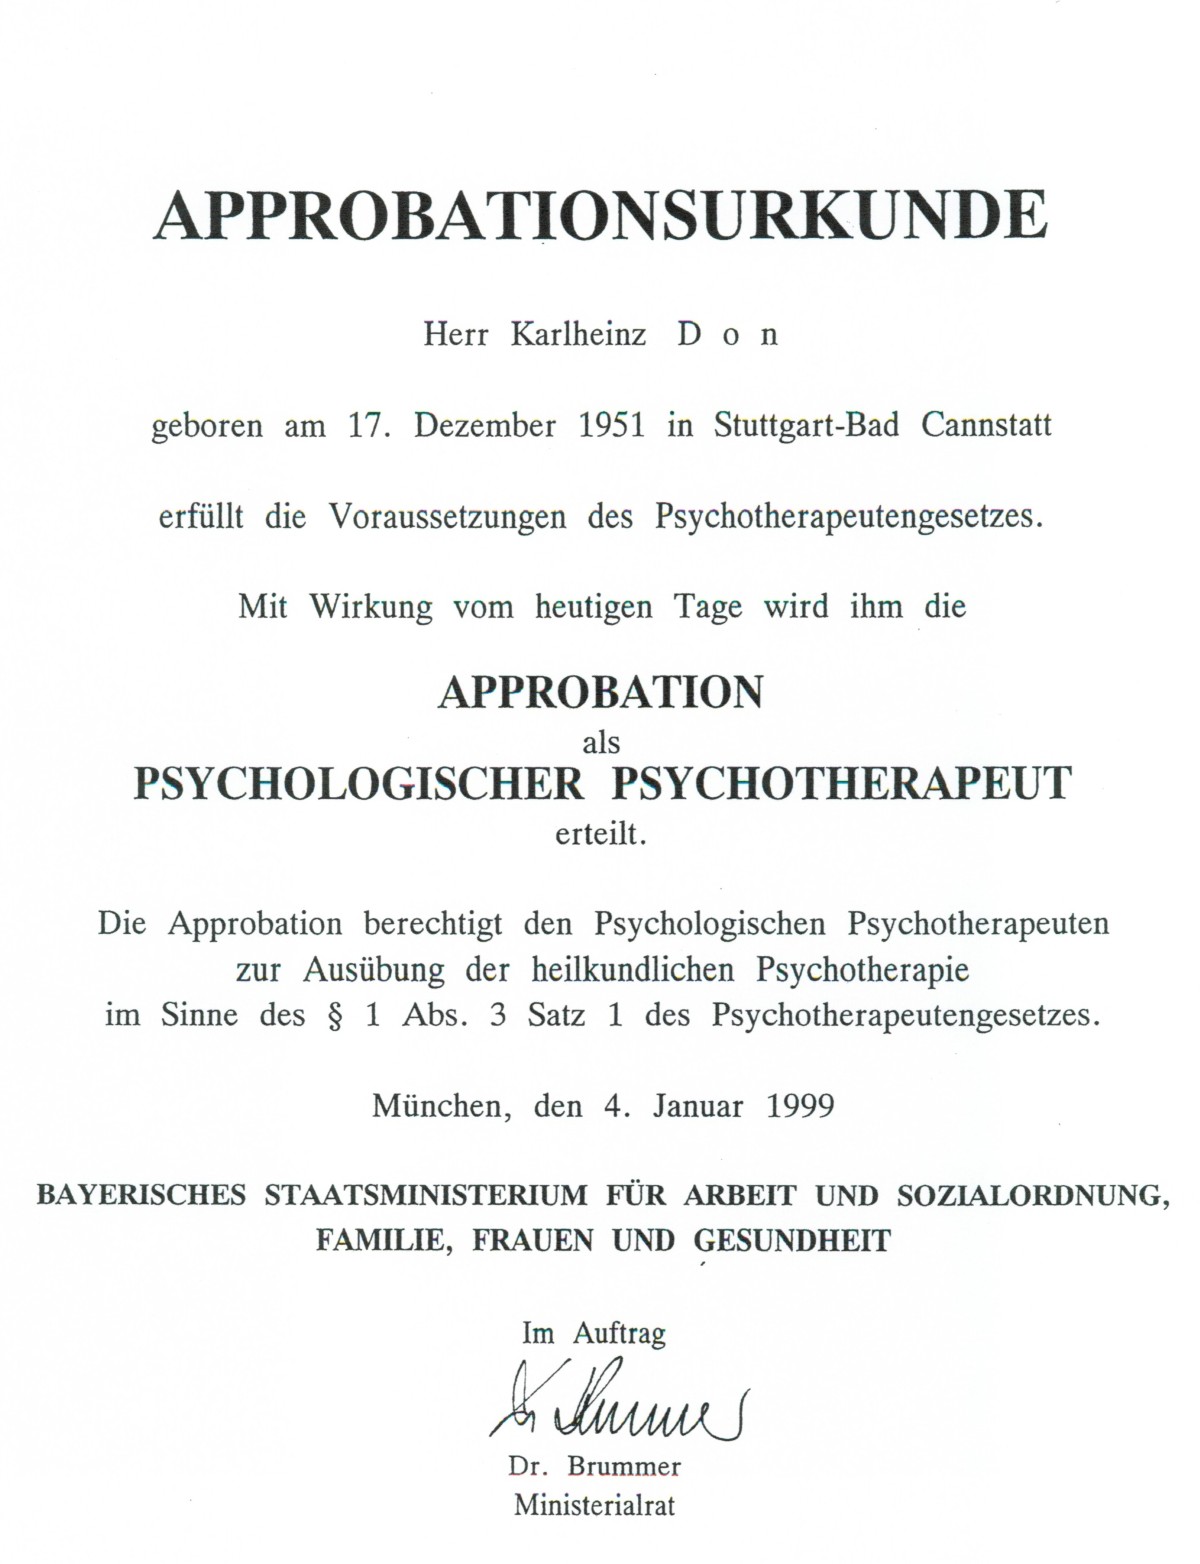 Approbation als Psychotherapeut (1999)